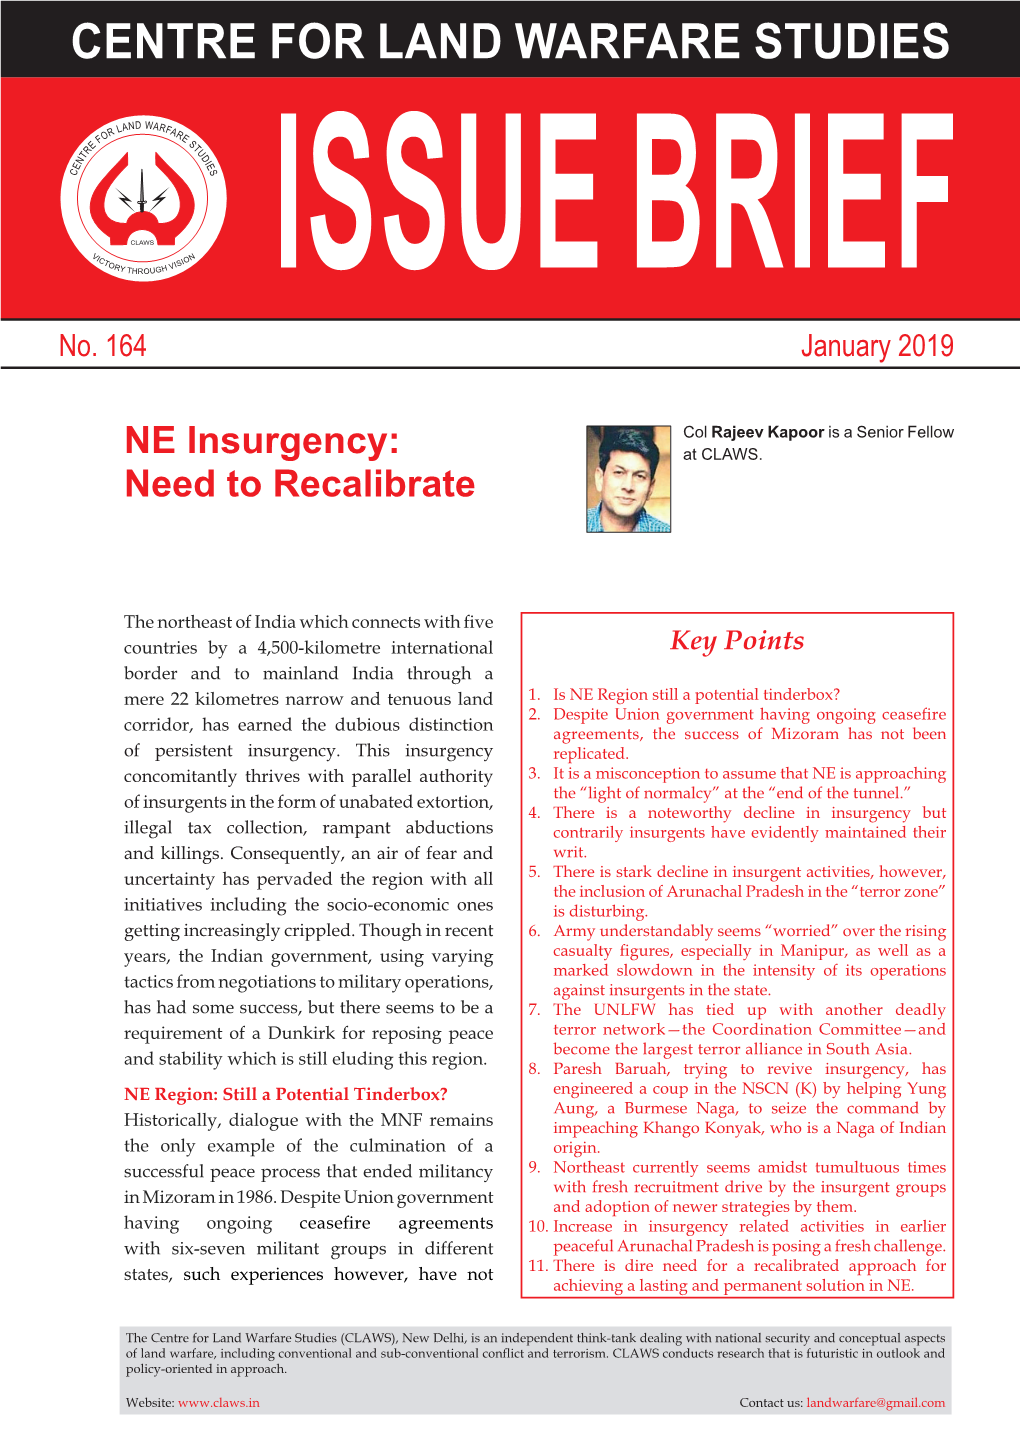 NE Insurgency: Need to Recalibrate